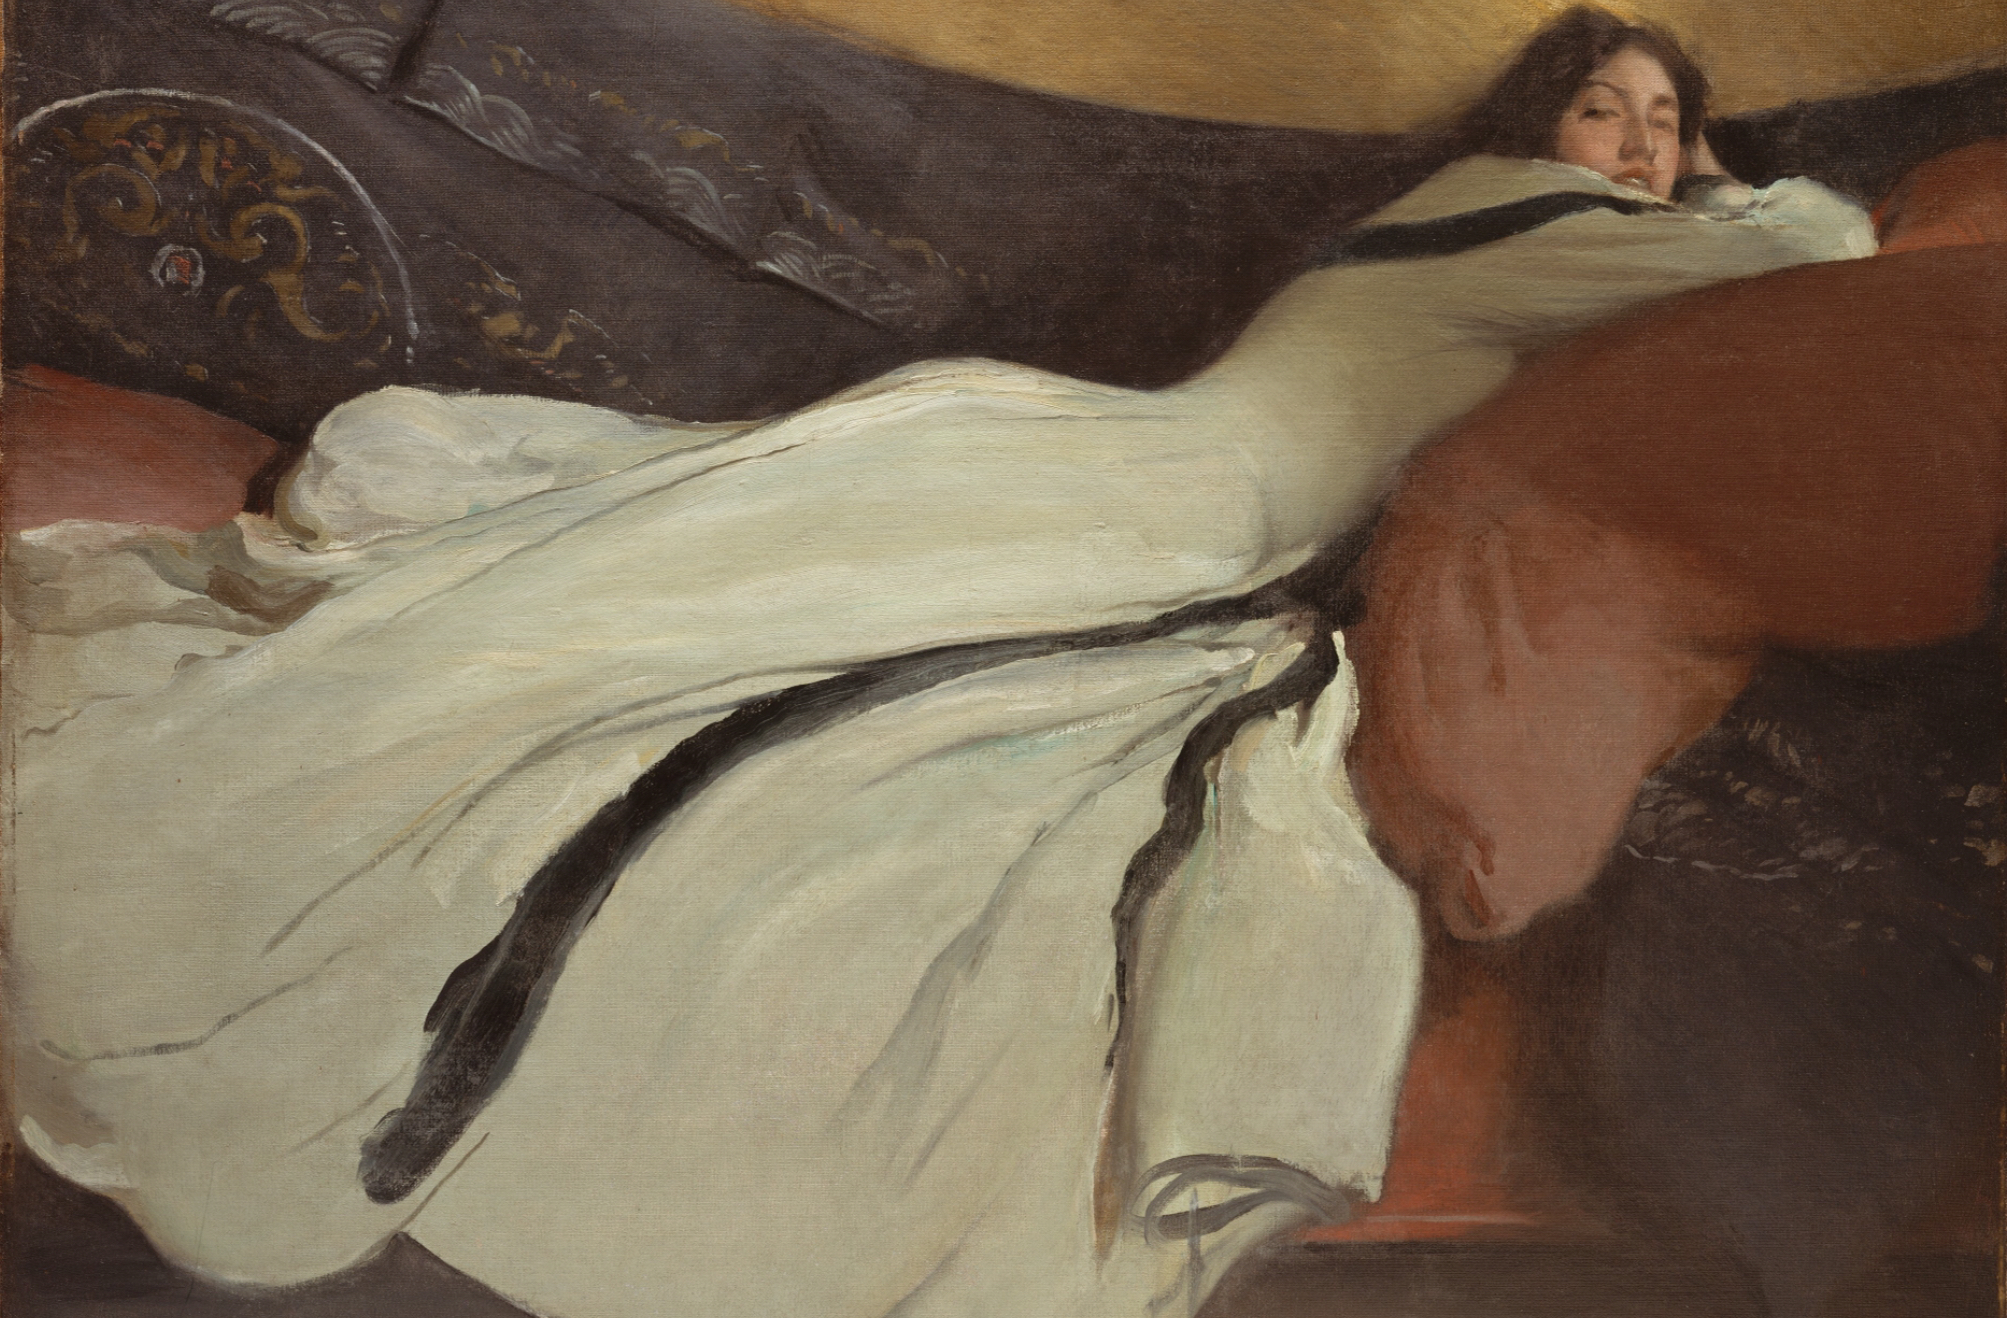 Repos by John White Alexander - 1895 - 132.7 x 161.6 cm Metropolitan Museum of Art